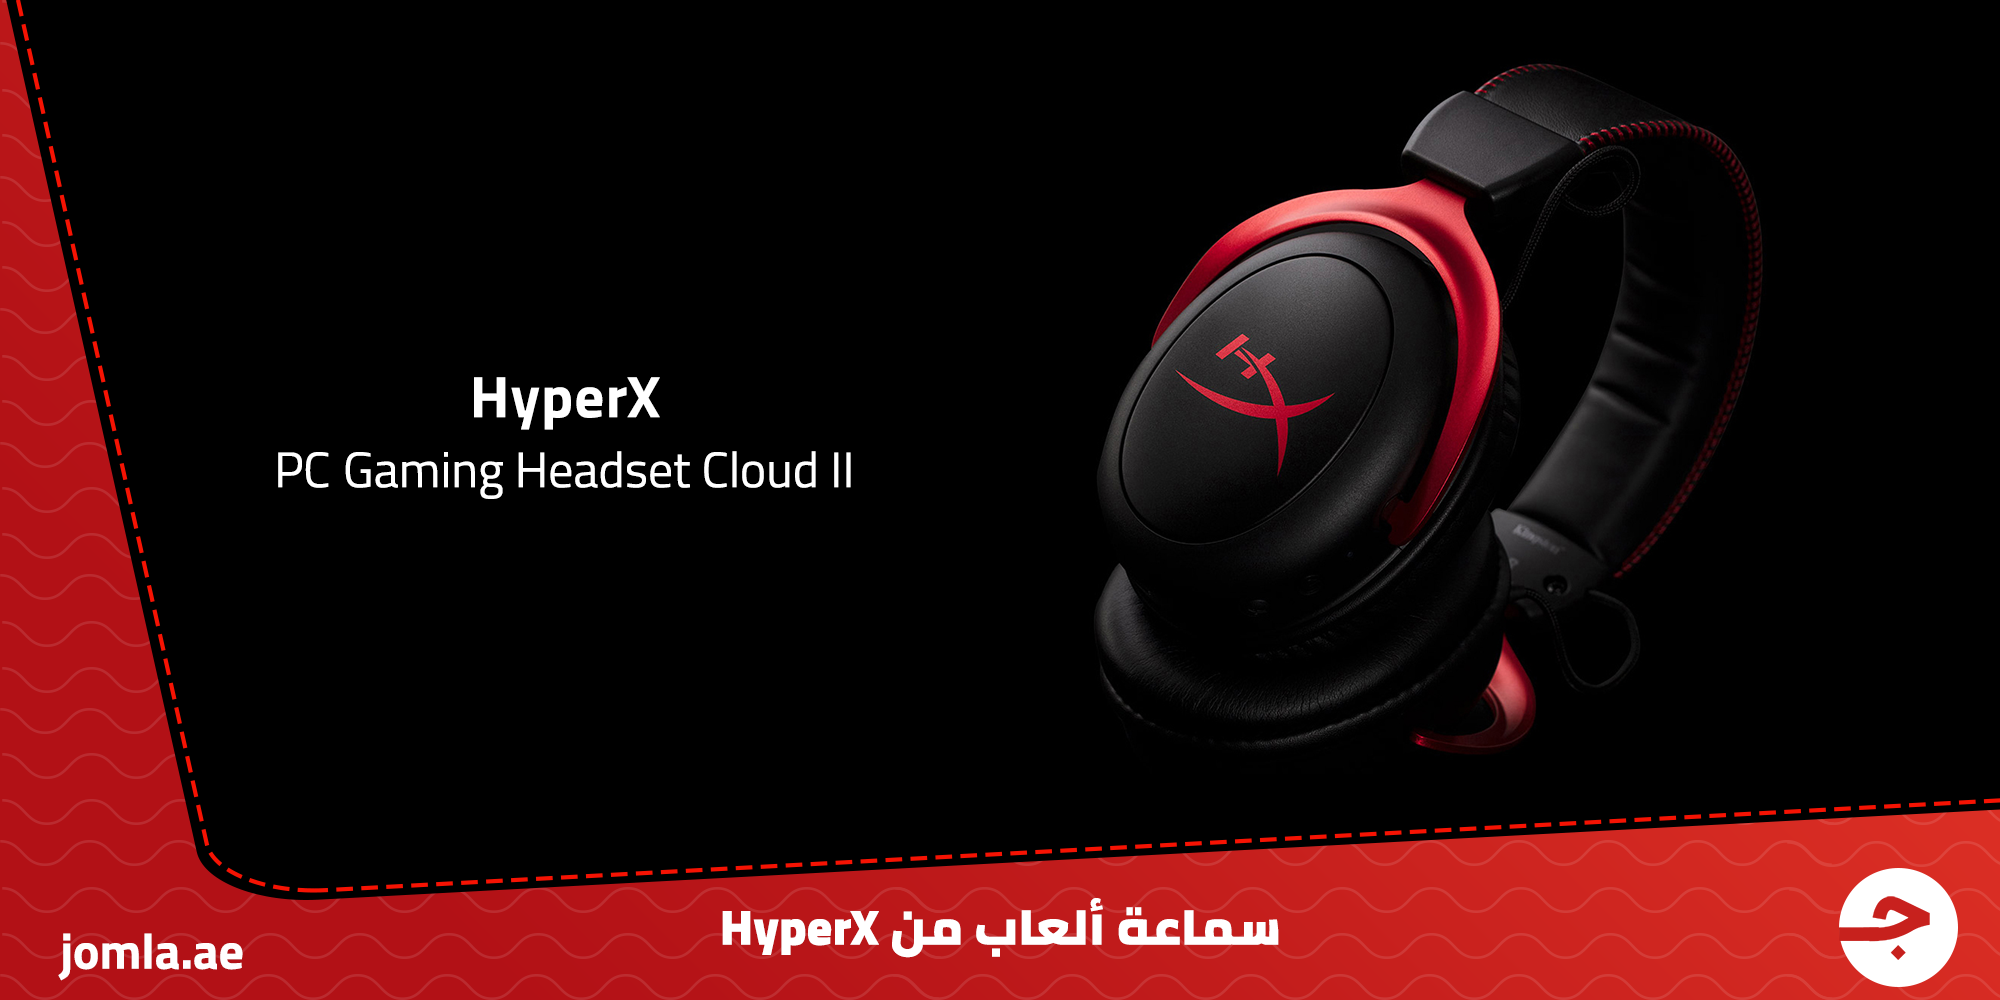 سماعة ألعاب Hyper X PC Gaming Headset Cloud II